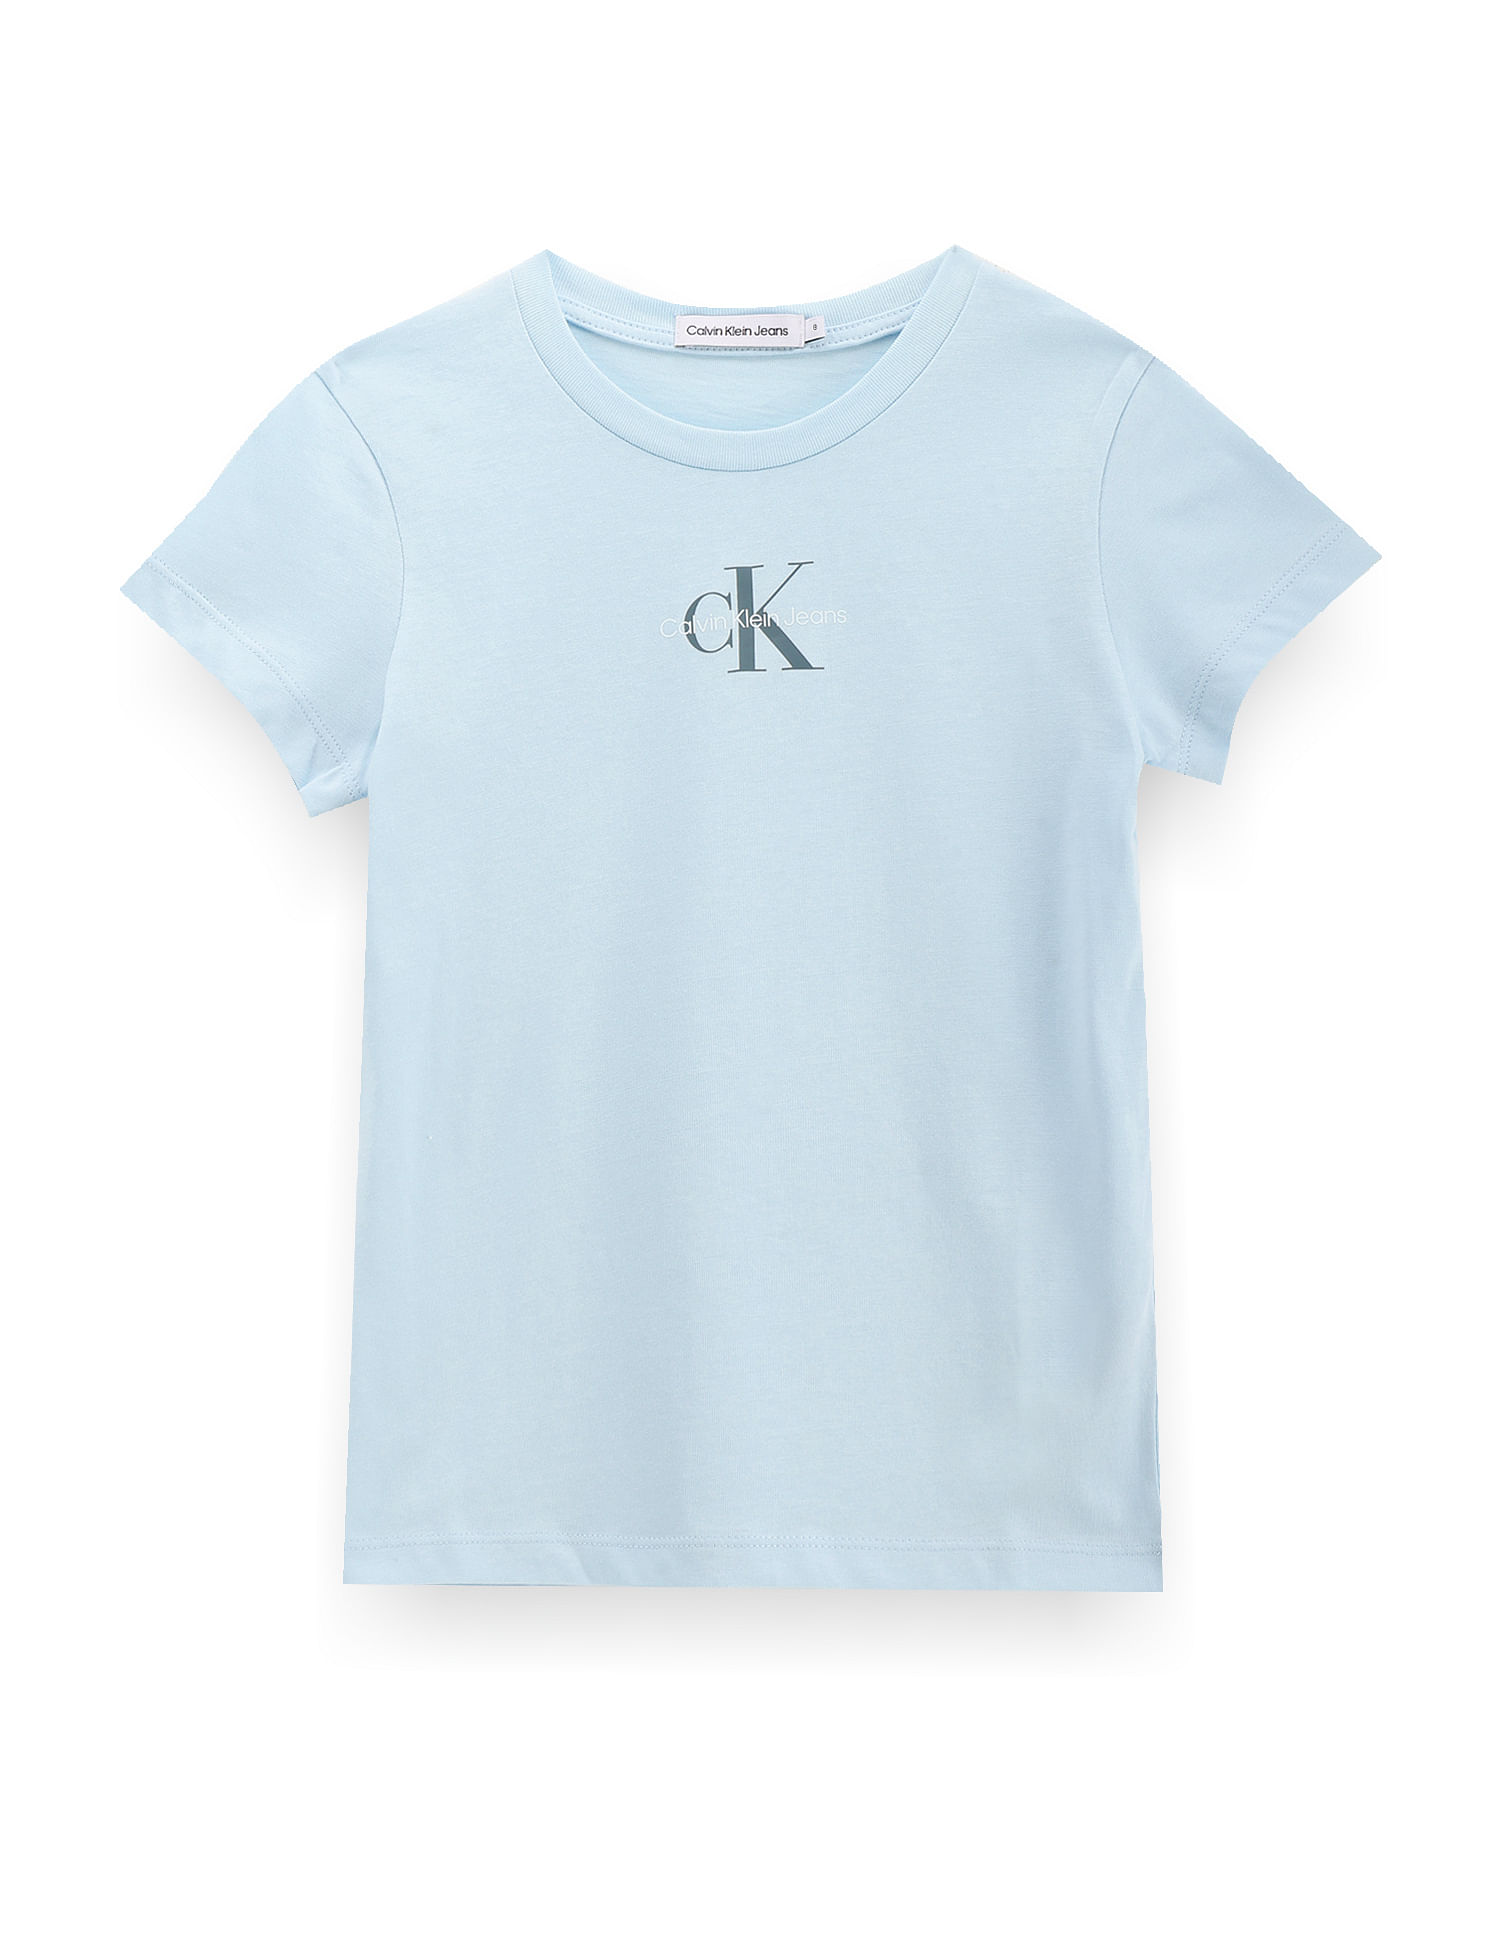 Shop Calvin Klein's Iconic Monogram Shirts